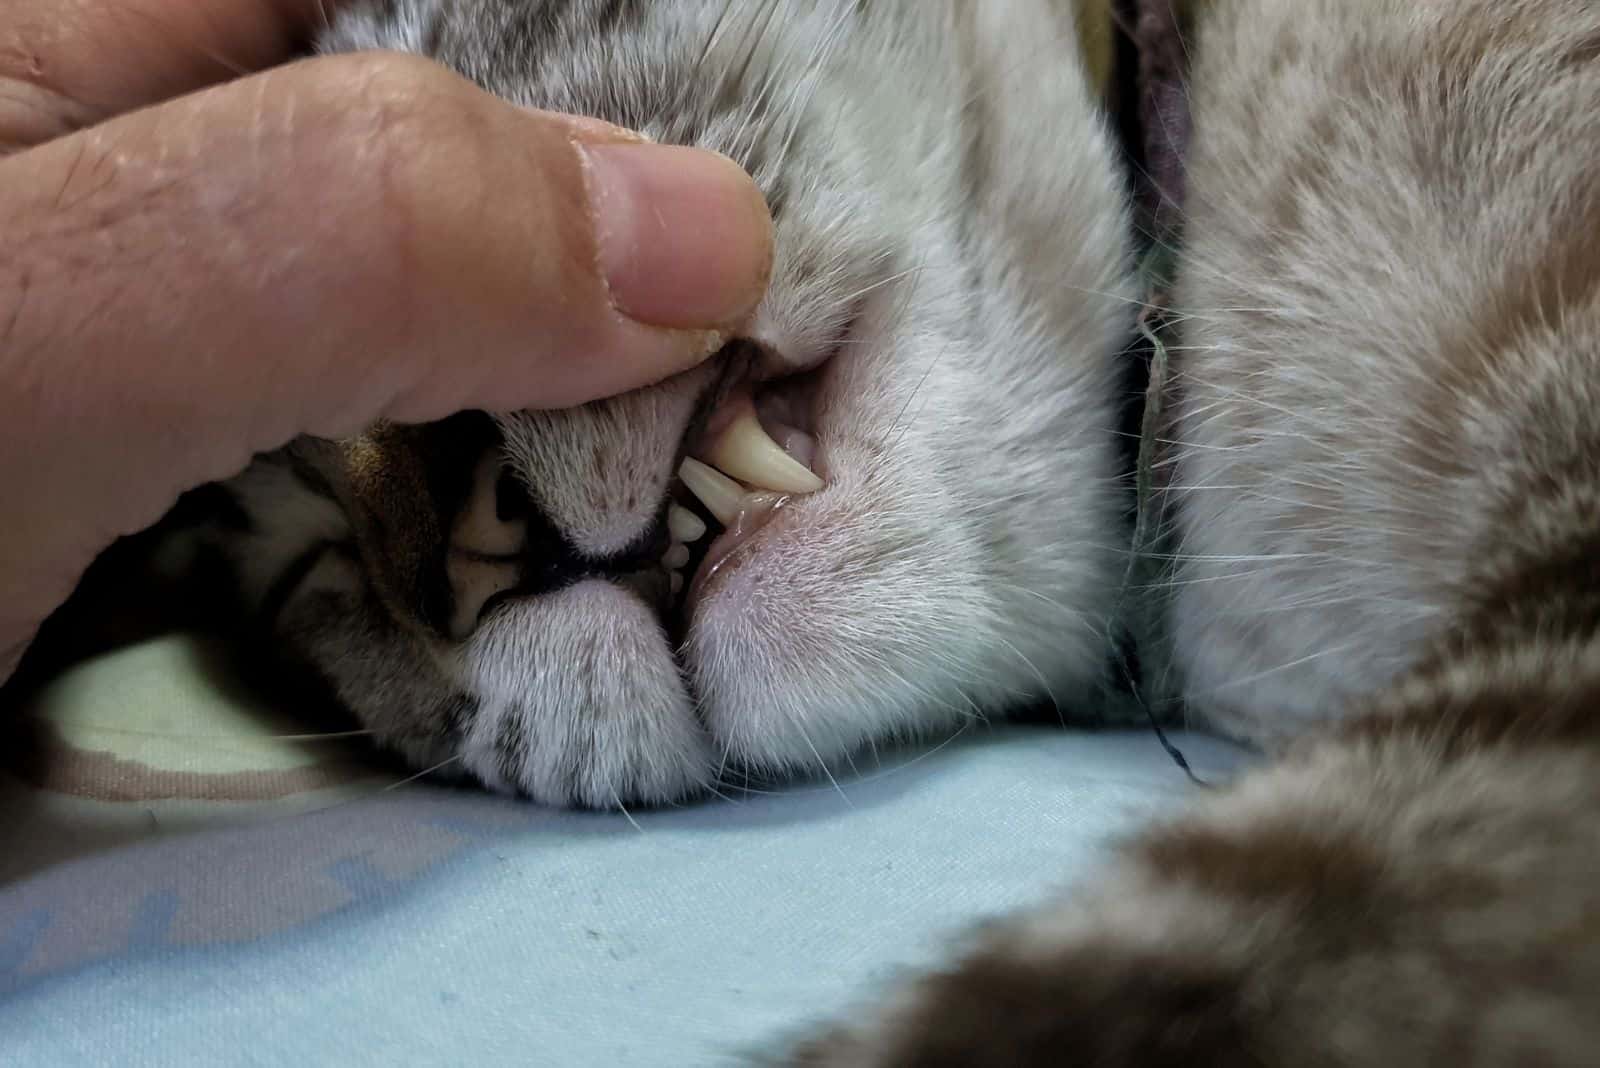 the veterinarian examines the cat's lips